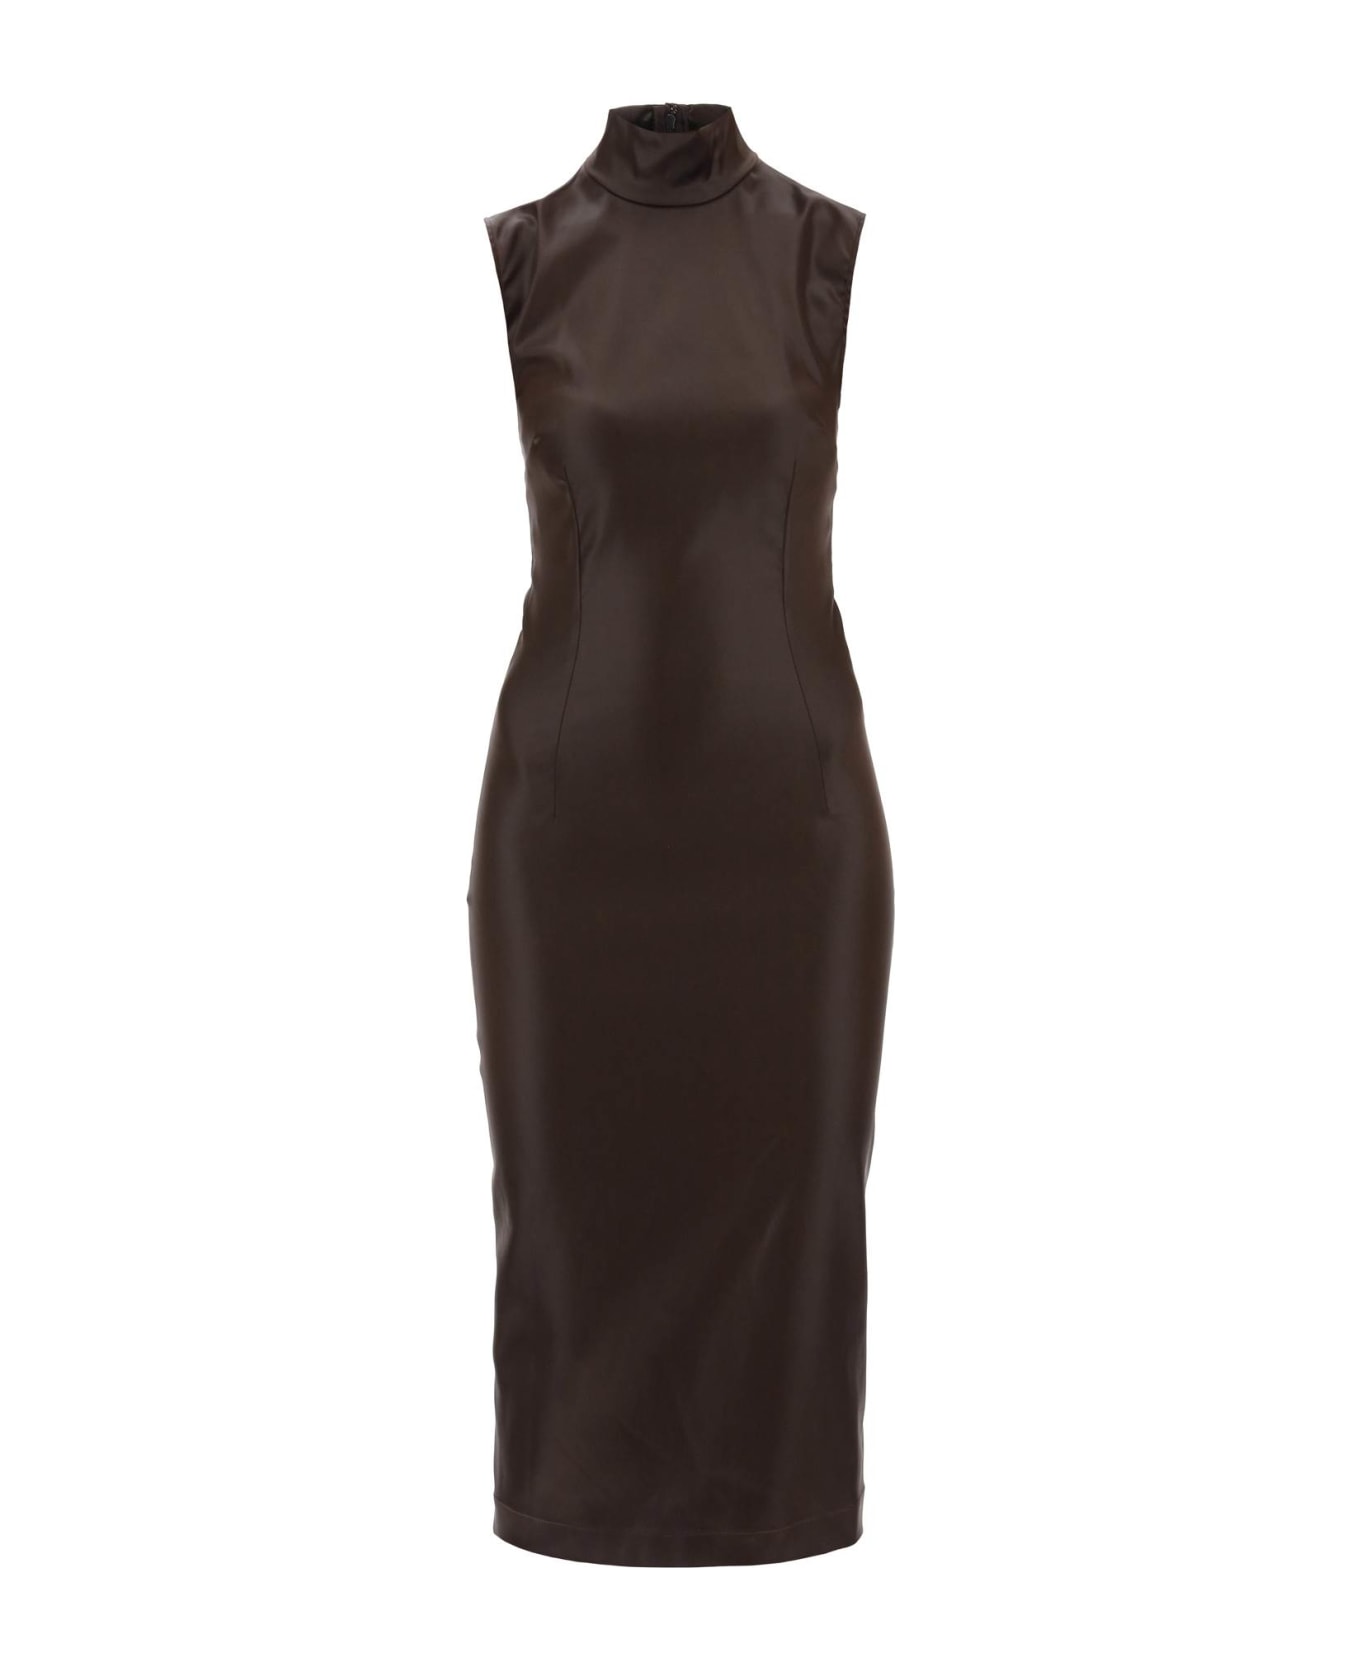 Dolce & Gabbana Sleeveless Midi Dress - MARRONE SCURO 4 (Brown)